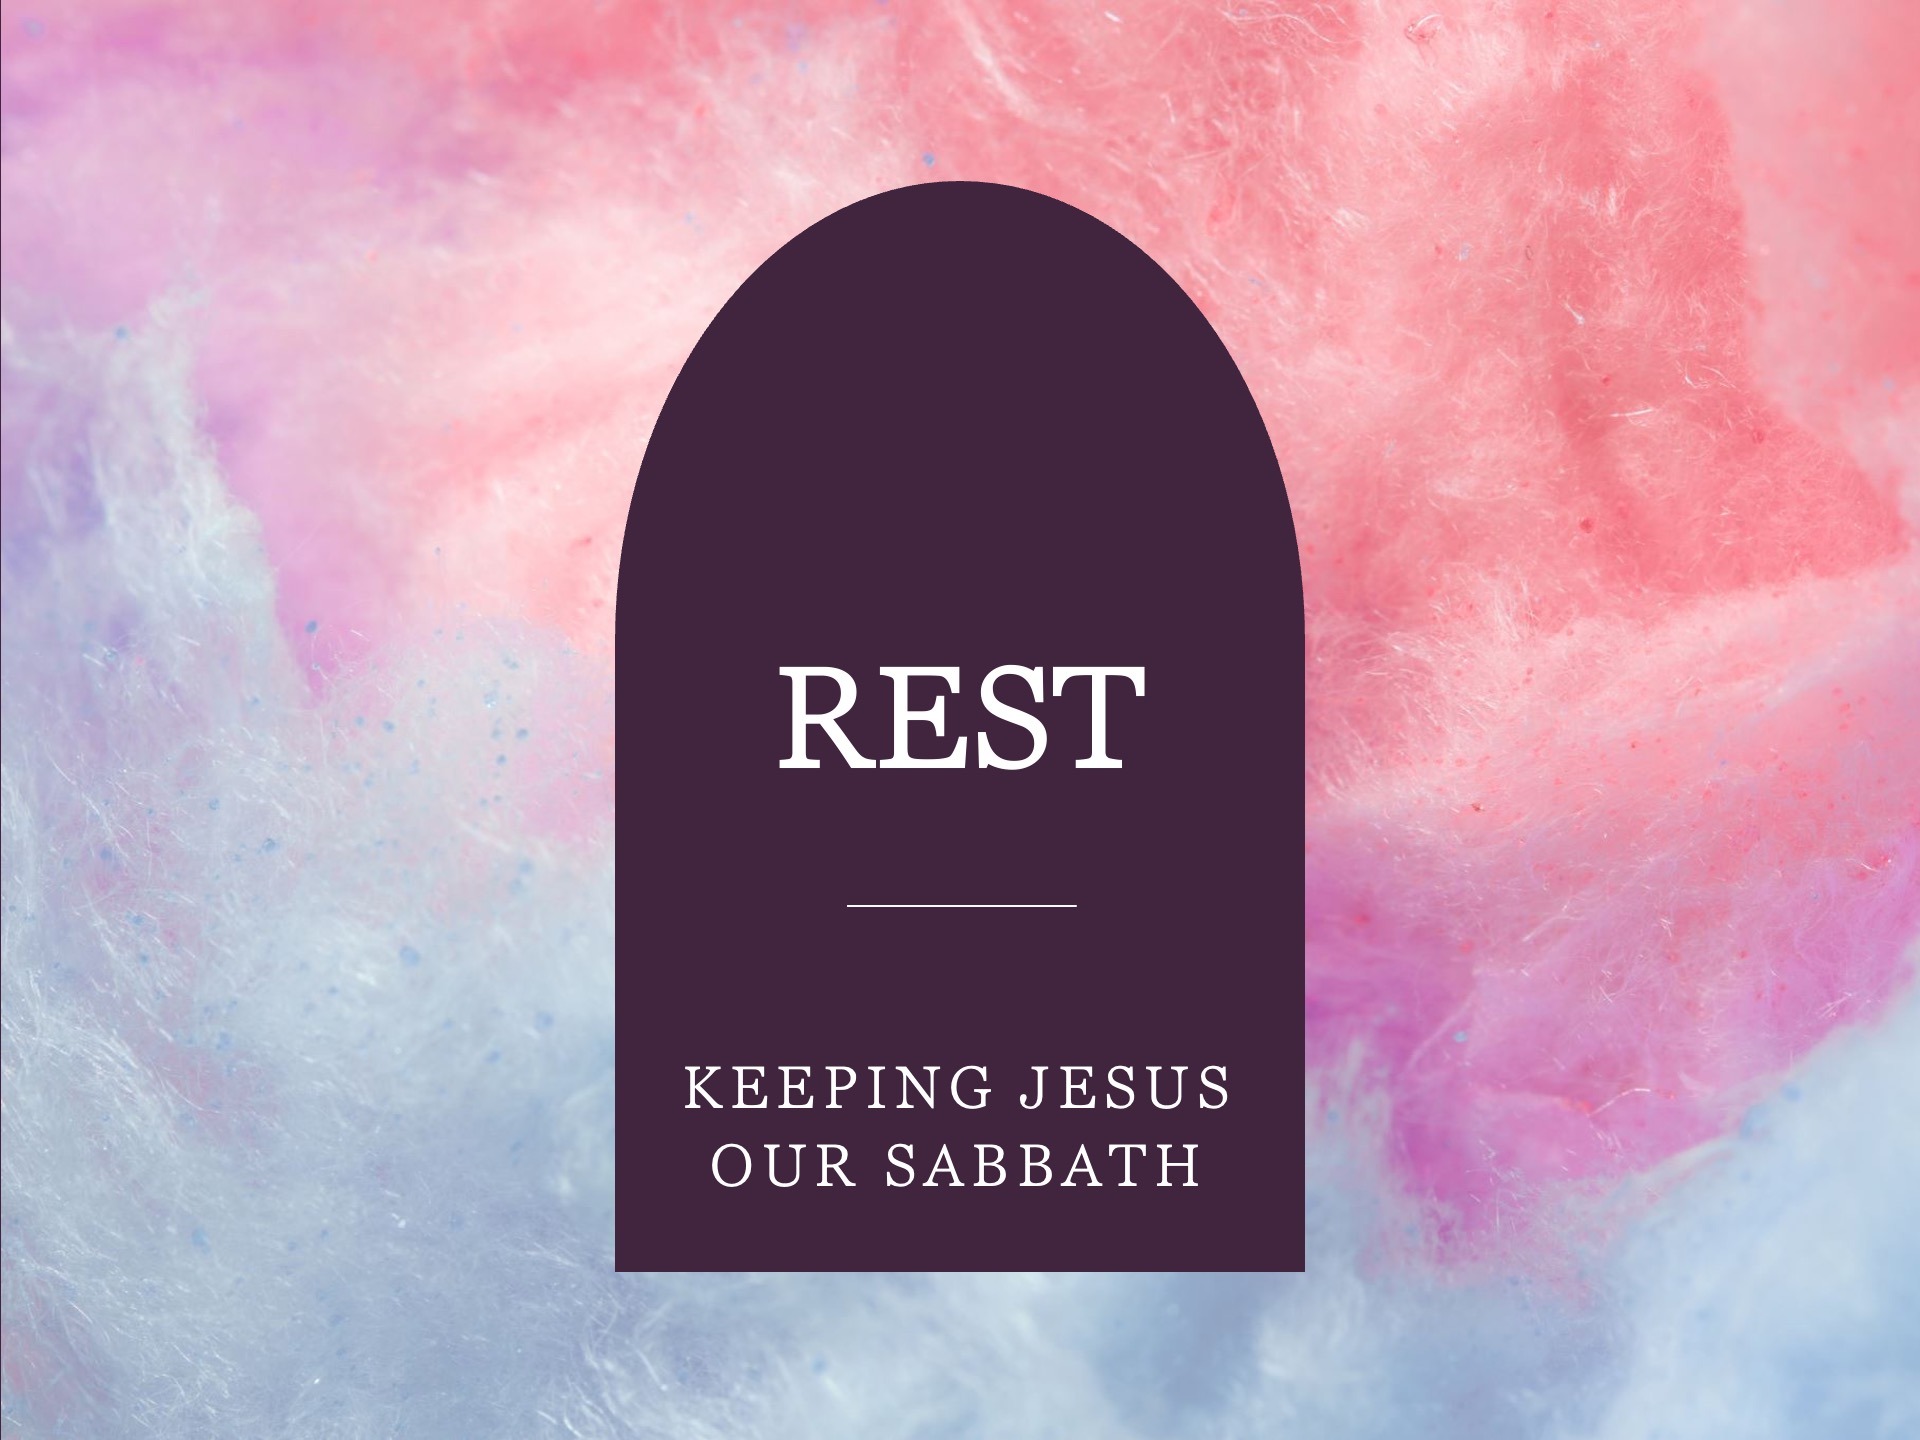 Rest: Keeping Jesus Our Sabbath